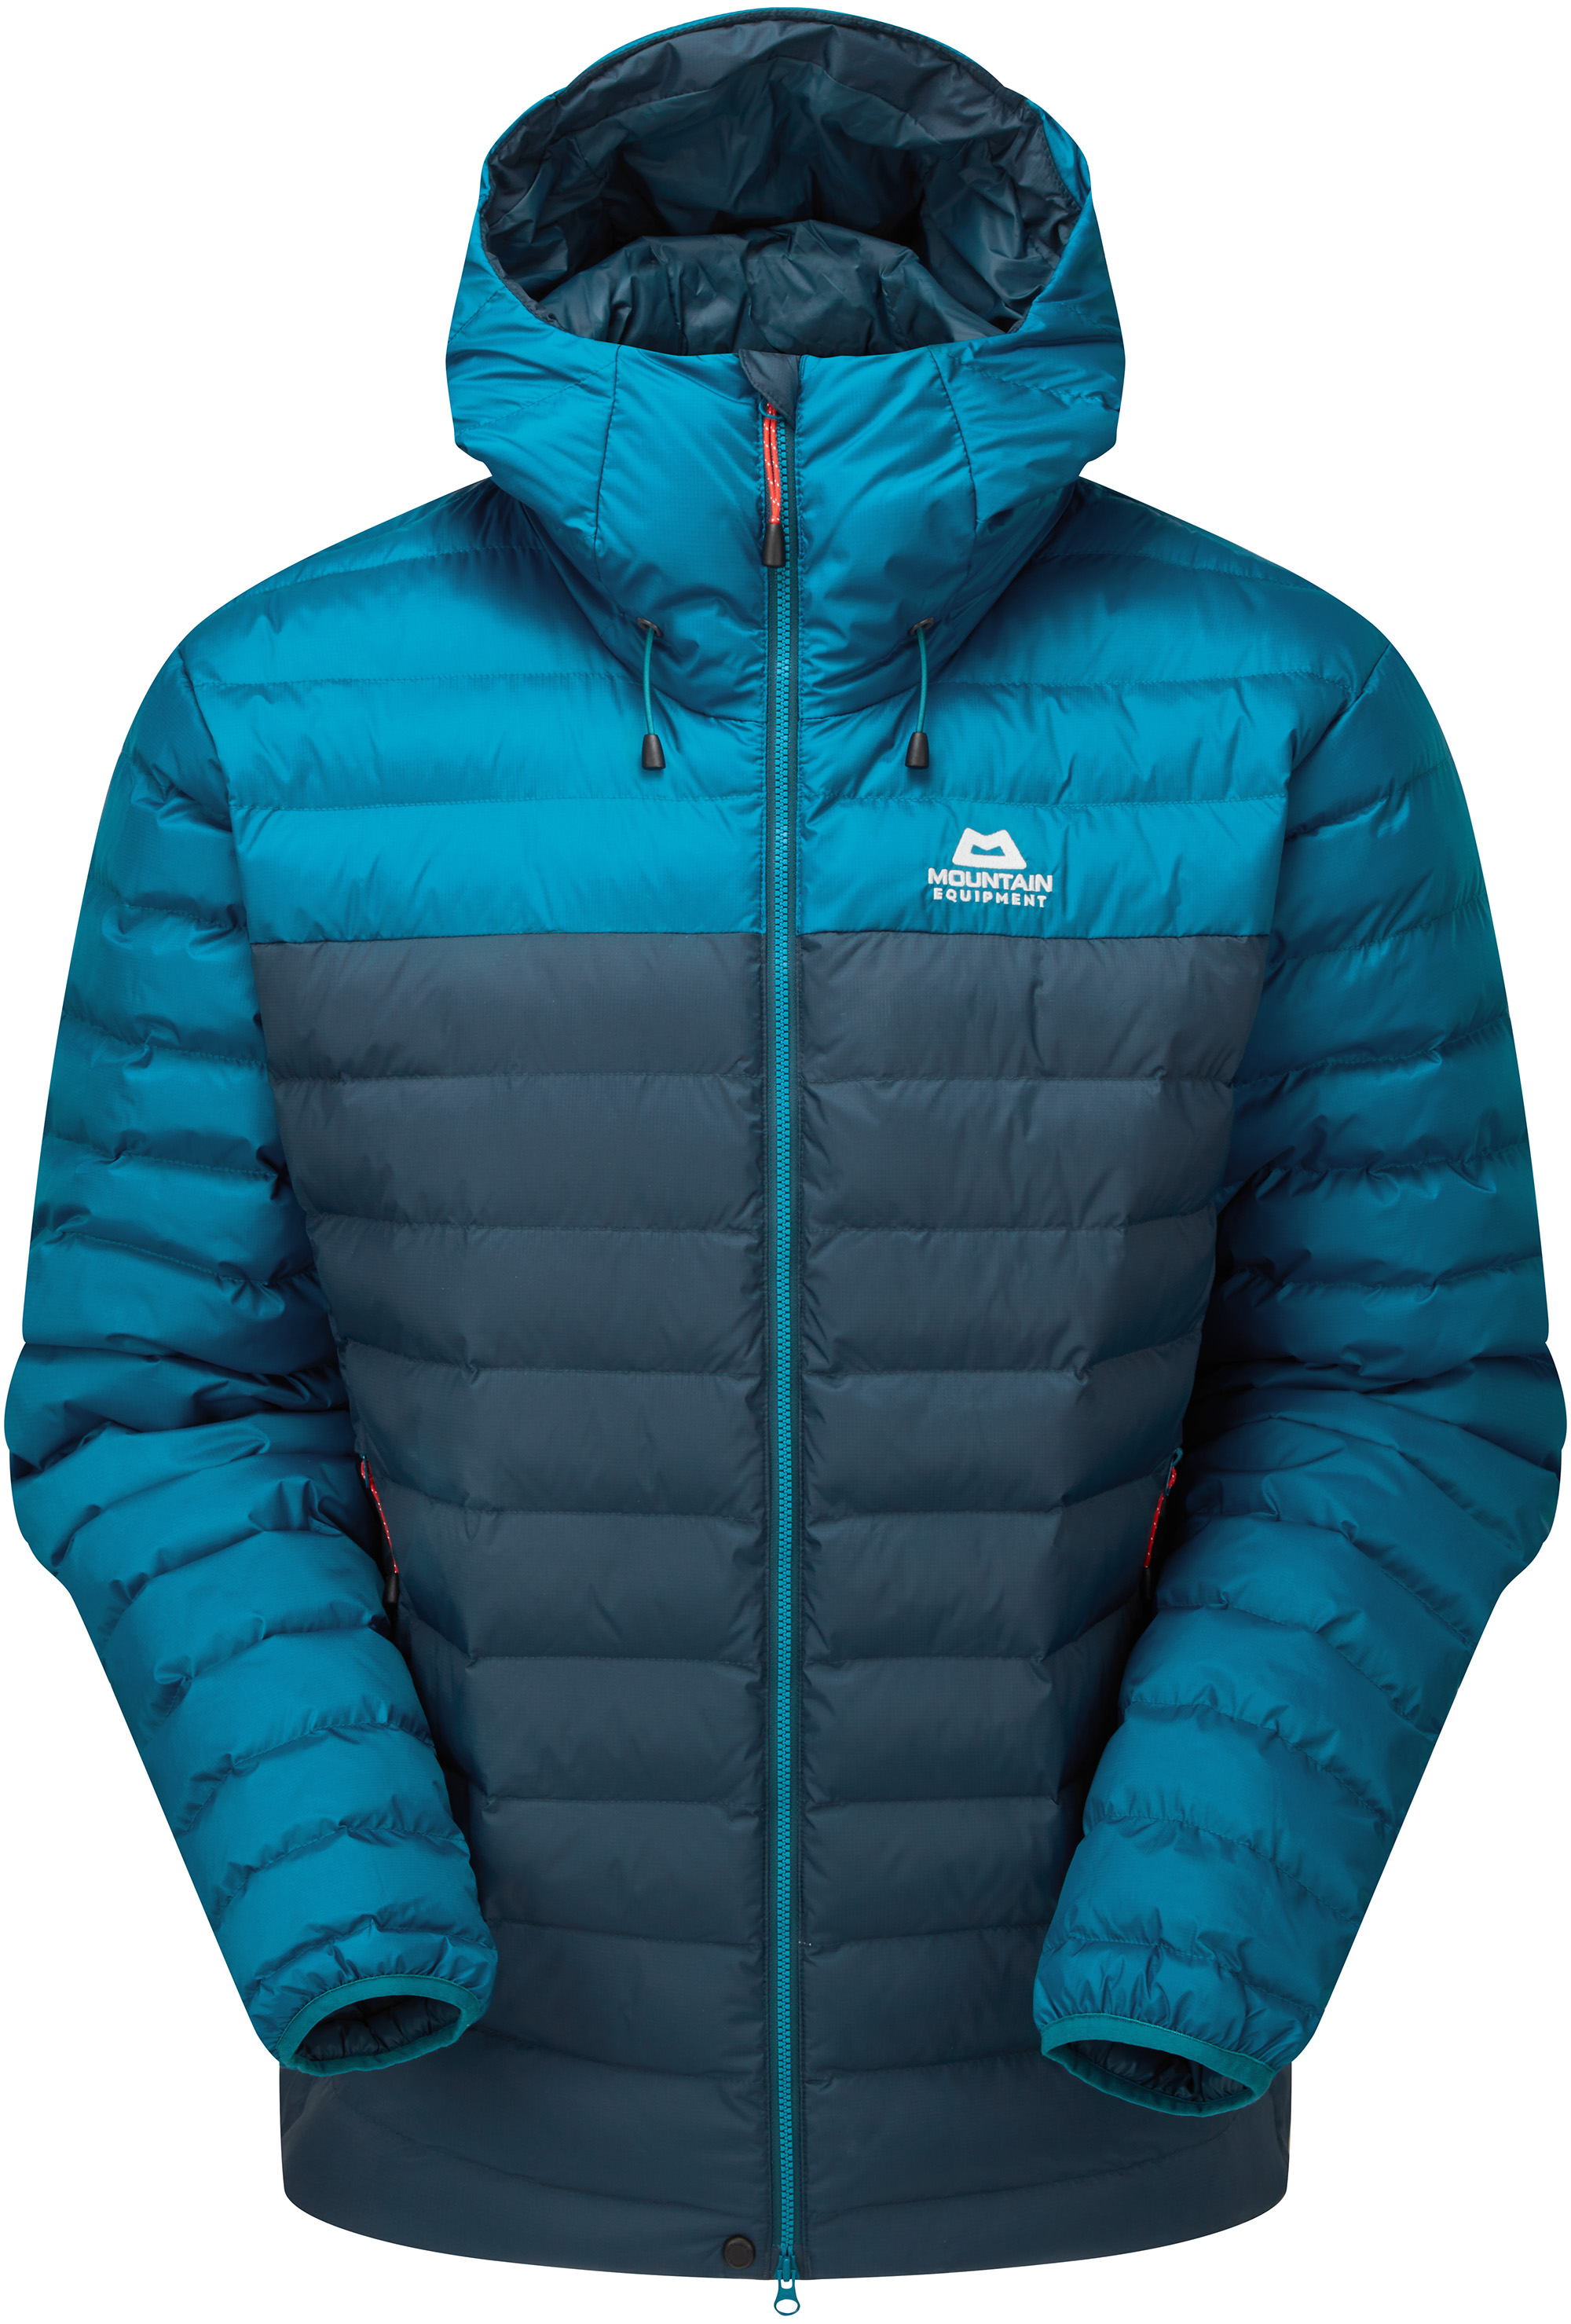 Mountain Equipment pánská zateplovací bunda Superflux Jacket Barva: Majolica/Mykonos, Velikost: XL